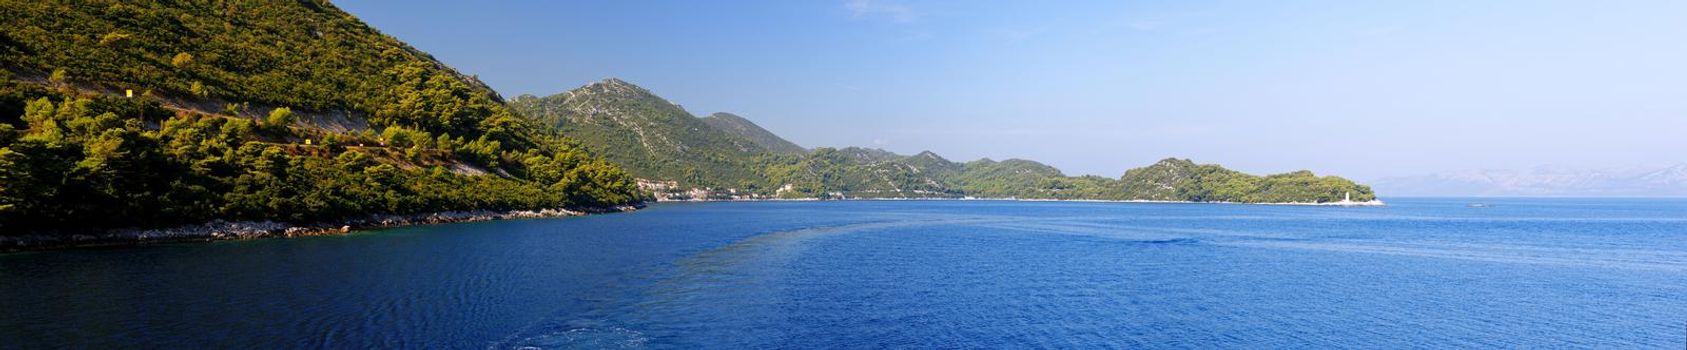 Sea coast of Sobra bay on Mljet island in Croatia